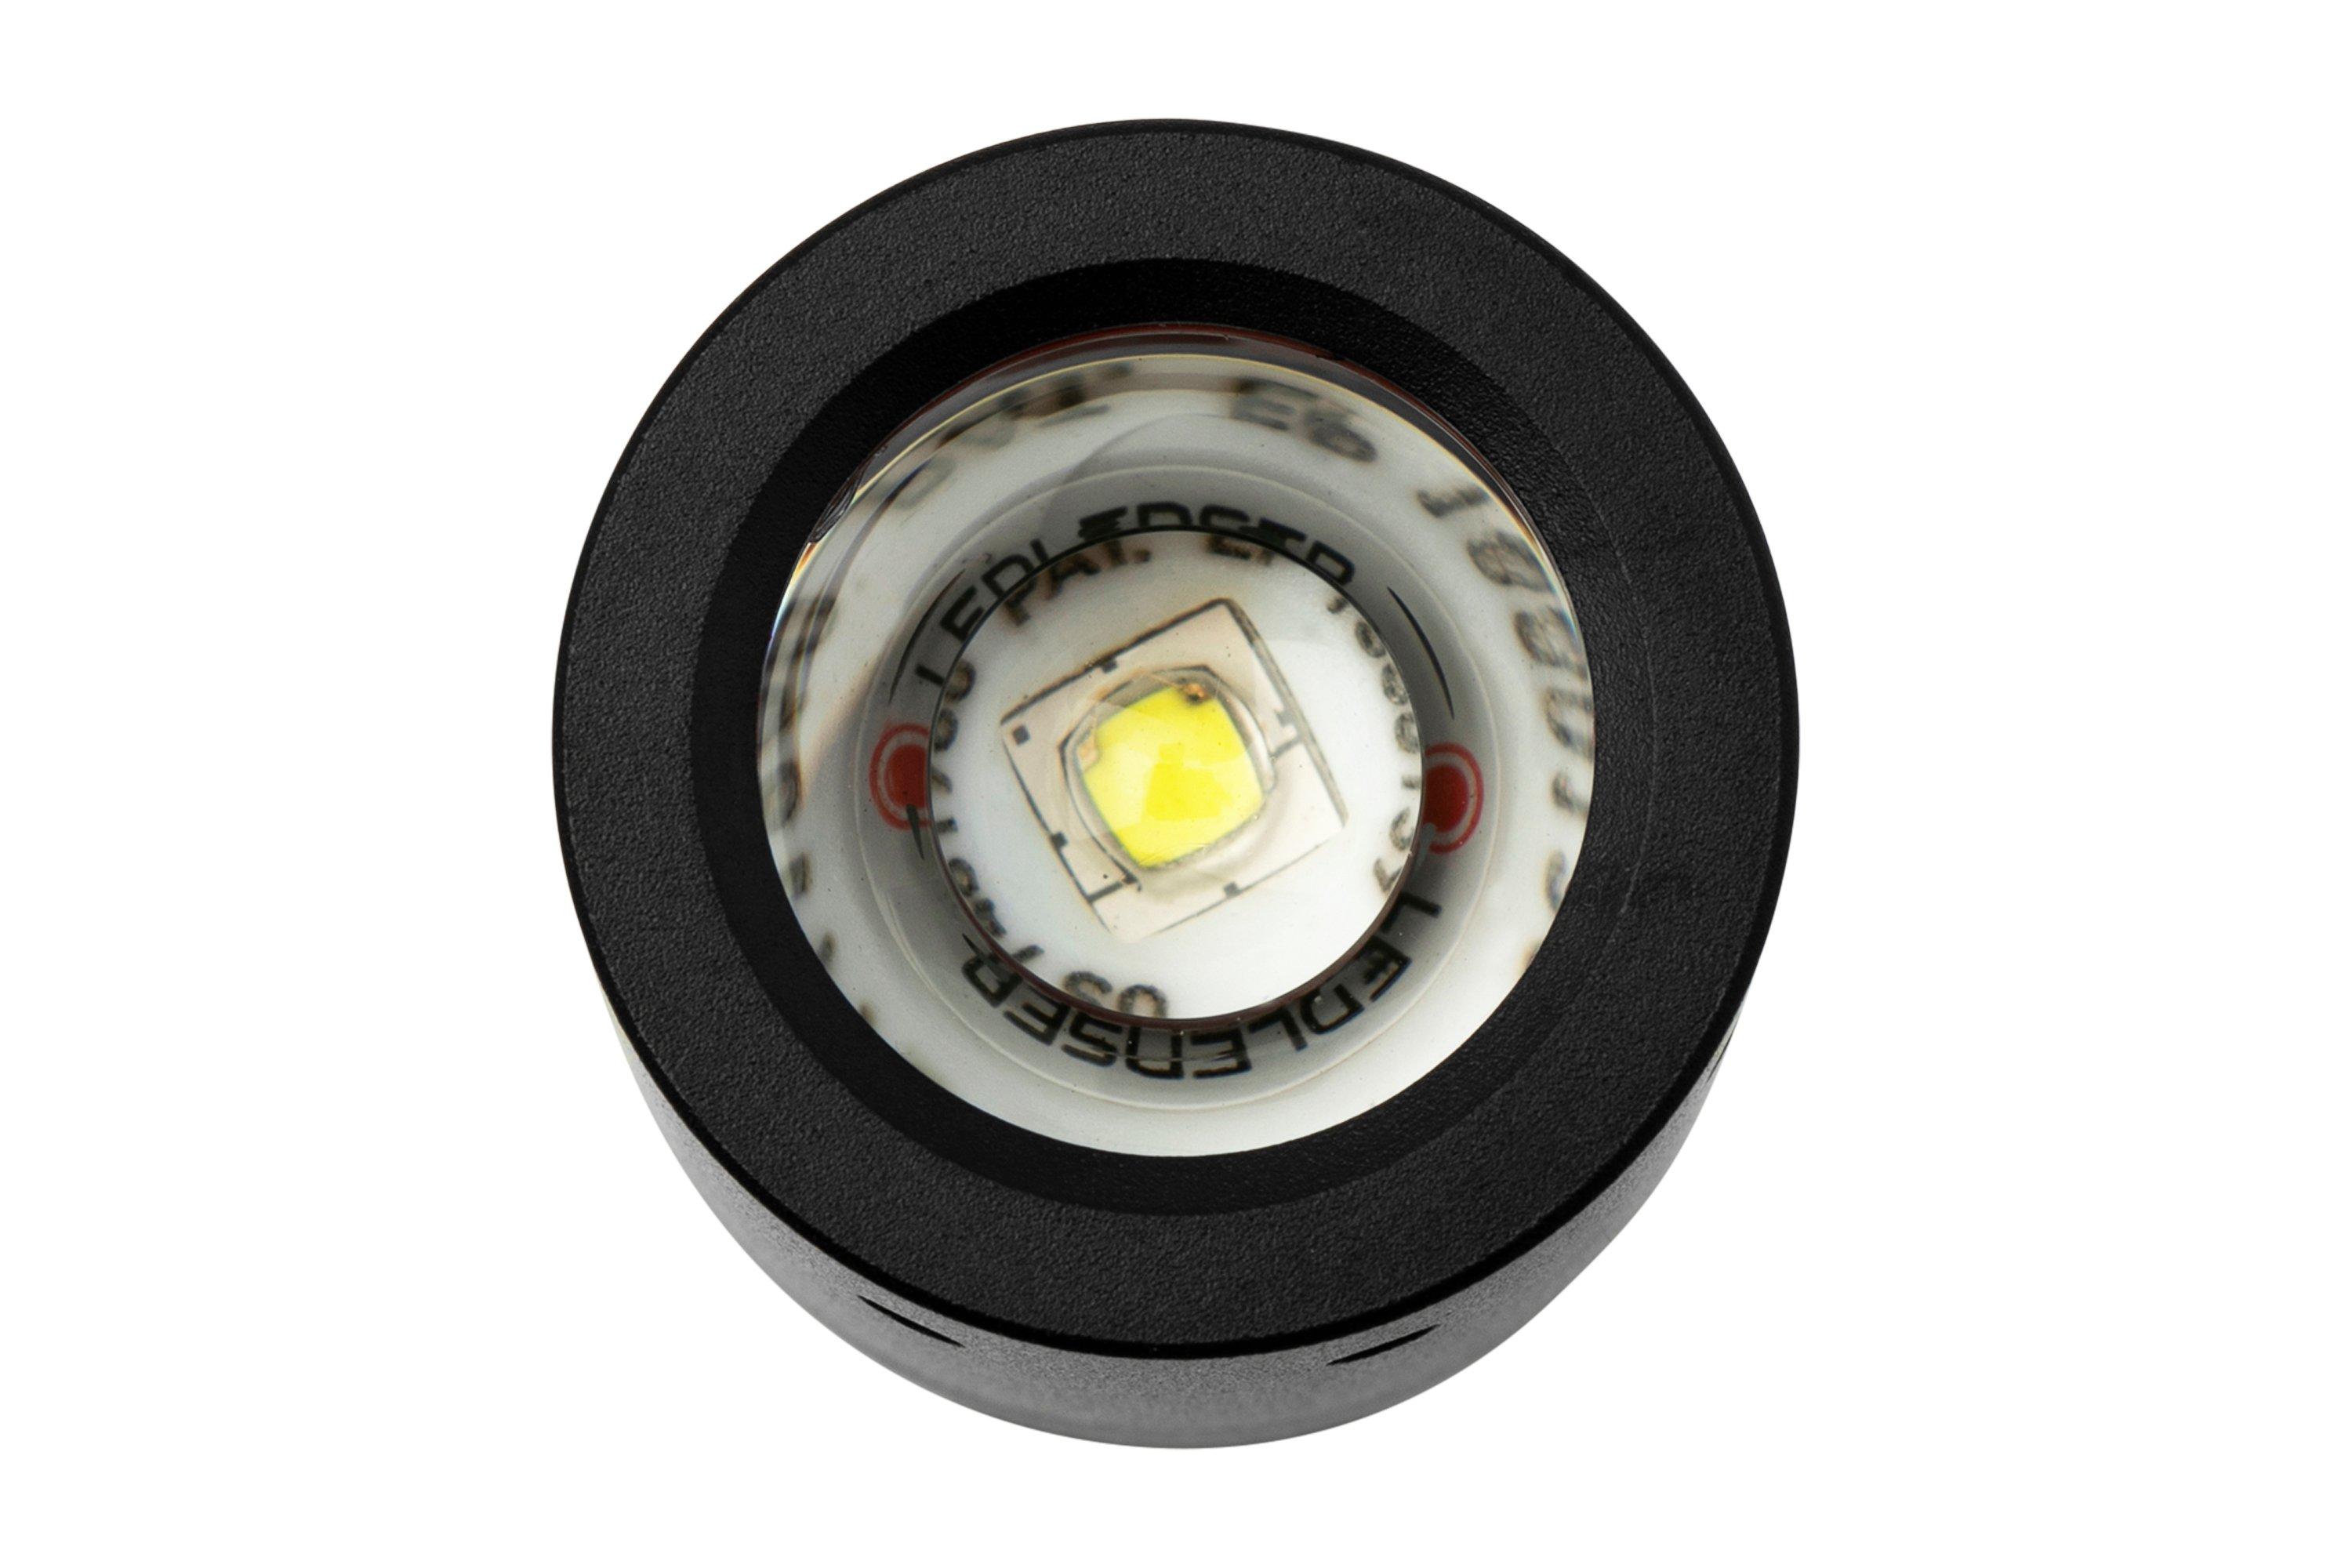 Ledlenser P5 Core, 150 lumens, flashlight  Advantageously shopping at